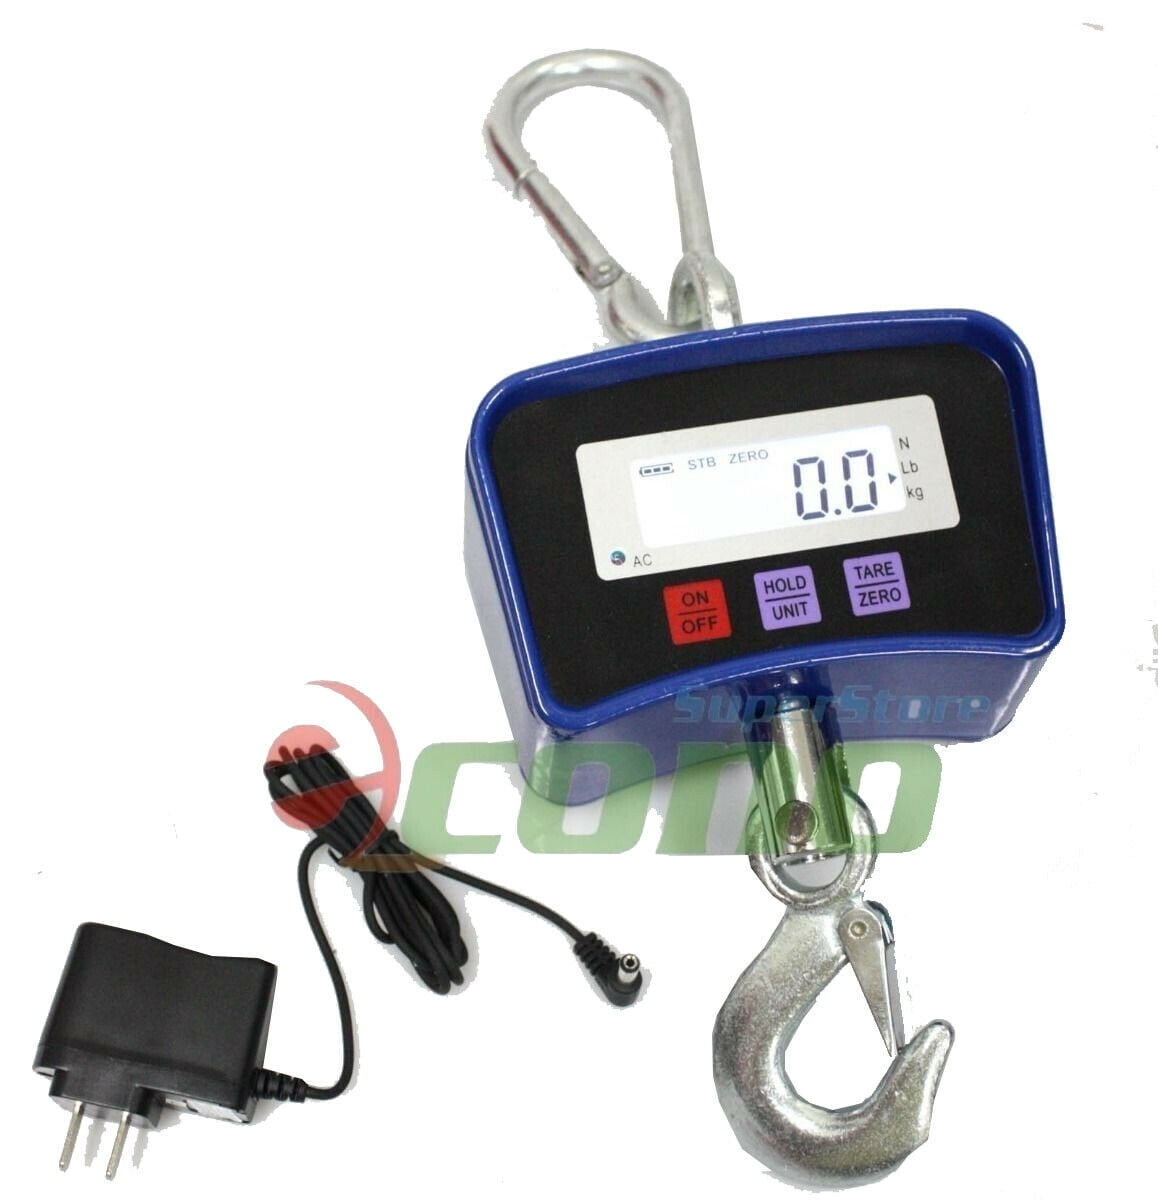 Wanlecy LCD Digital Display Crane Scale 500 KG/1100 LBS Heavy Duty Industrial Hook Hanging Weight Scale